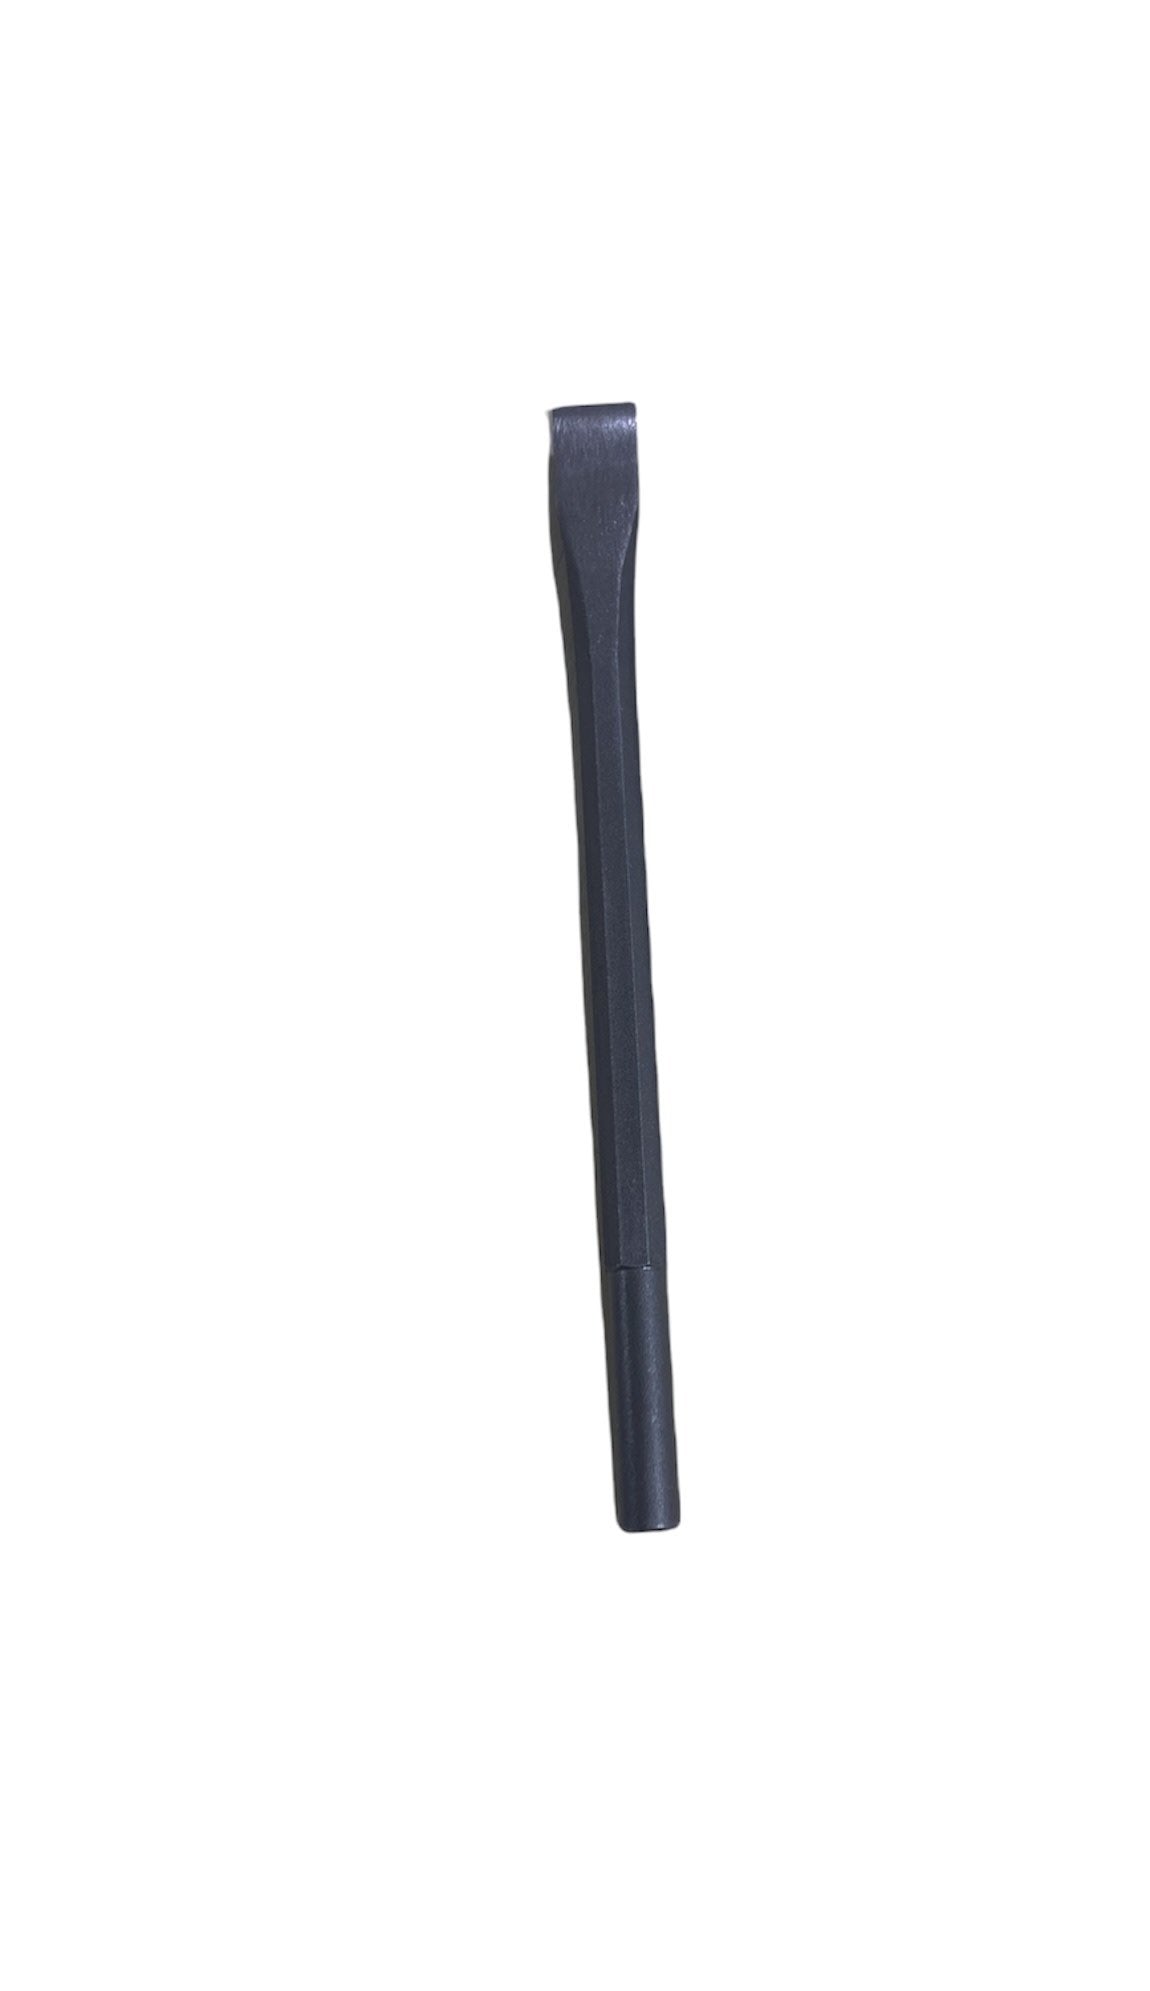 Steel Pneumatic Flat Chisels (12.5mm shank)